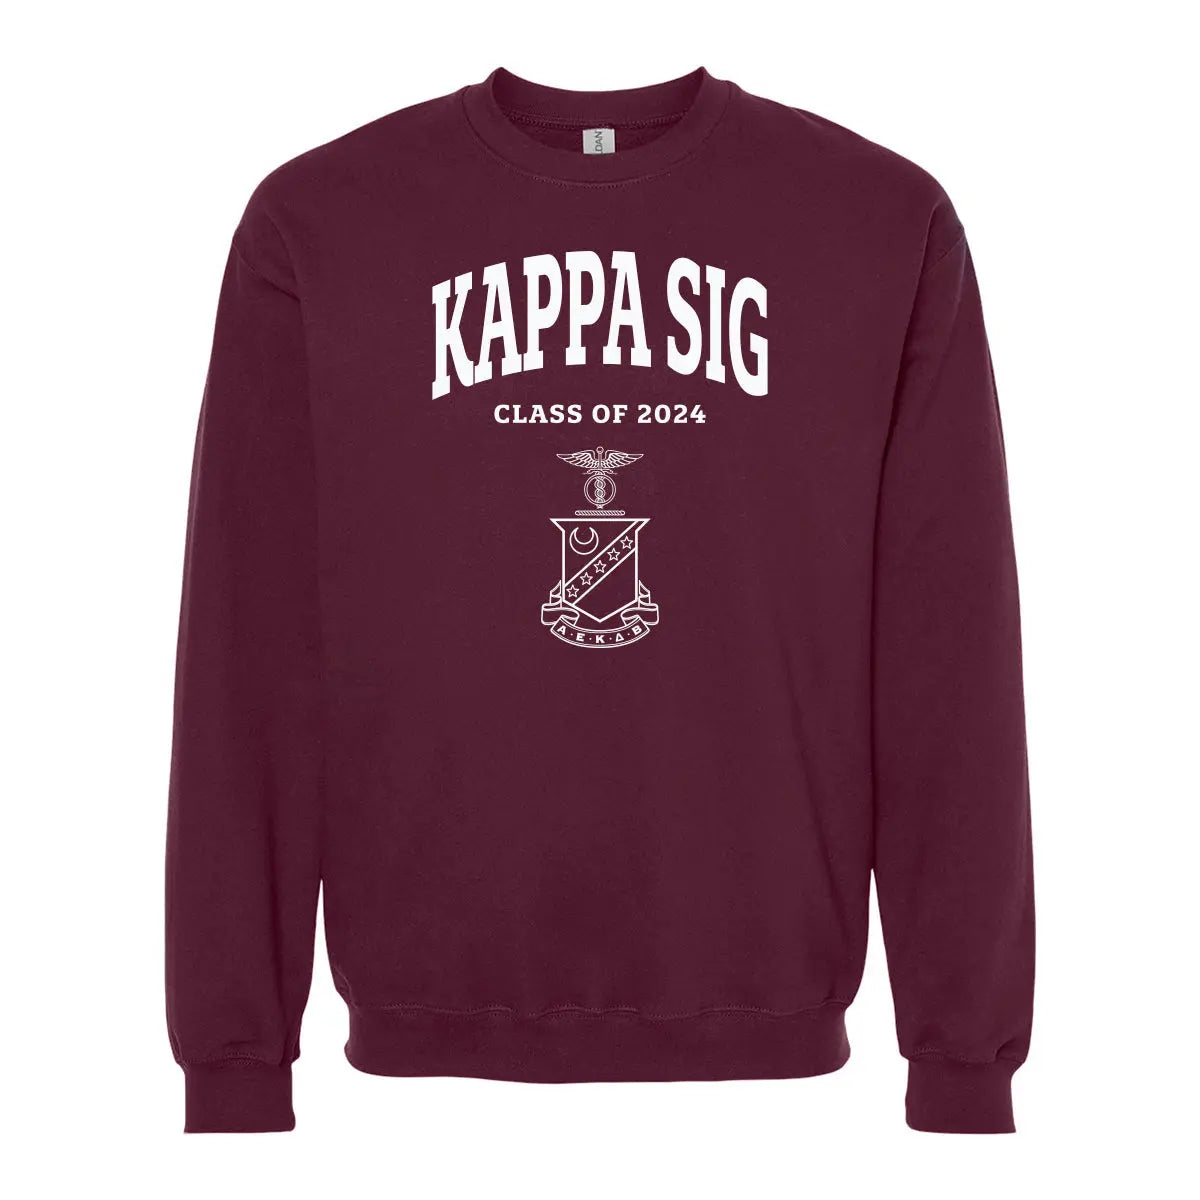 New! Kappa Sig Class of 2024 Graduation Crewneck - Kappa Sigma Official Store